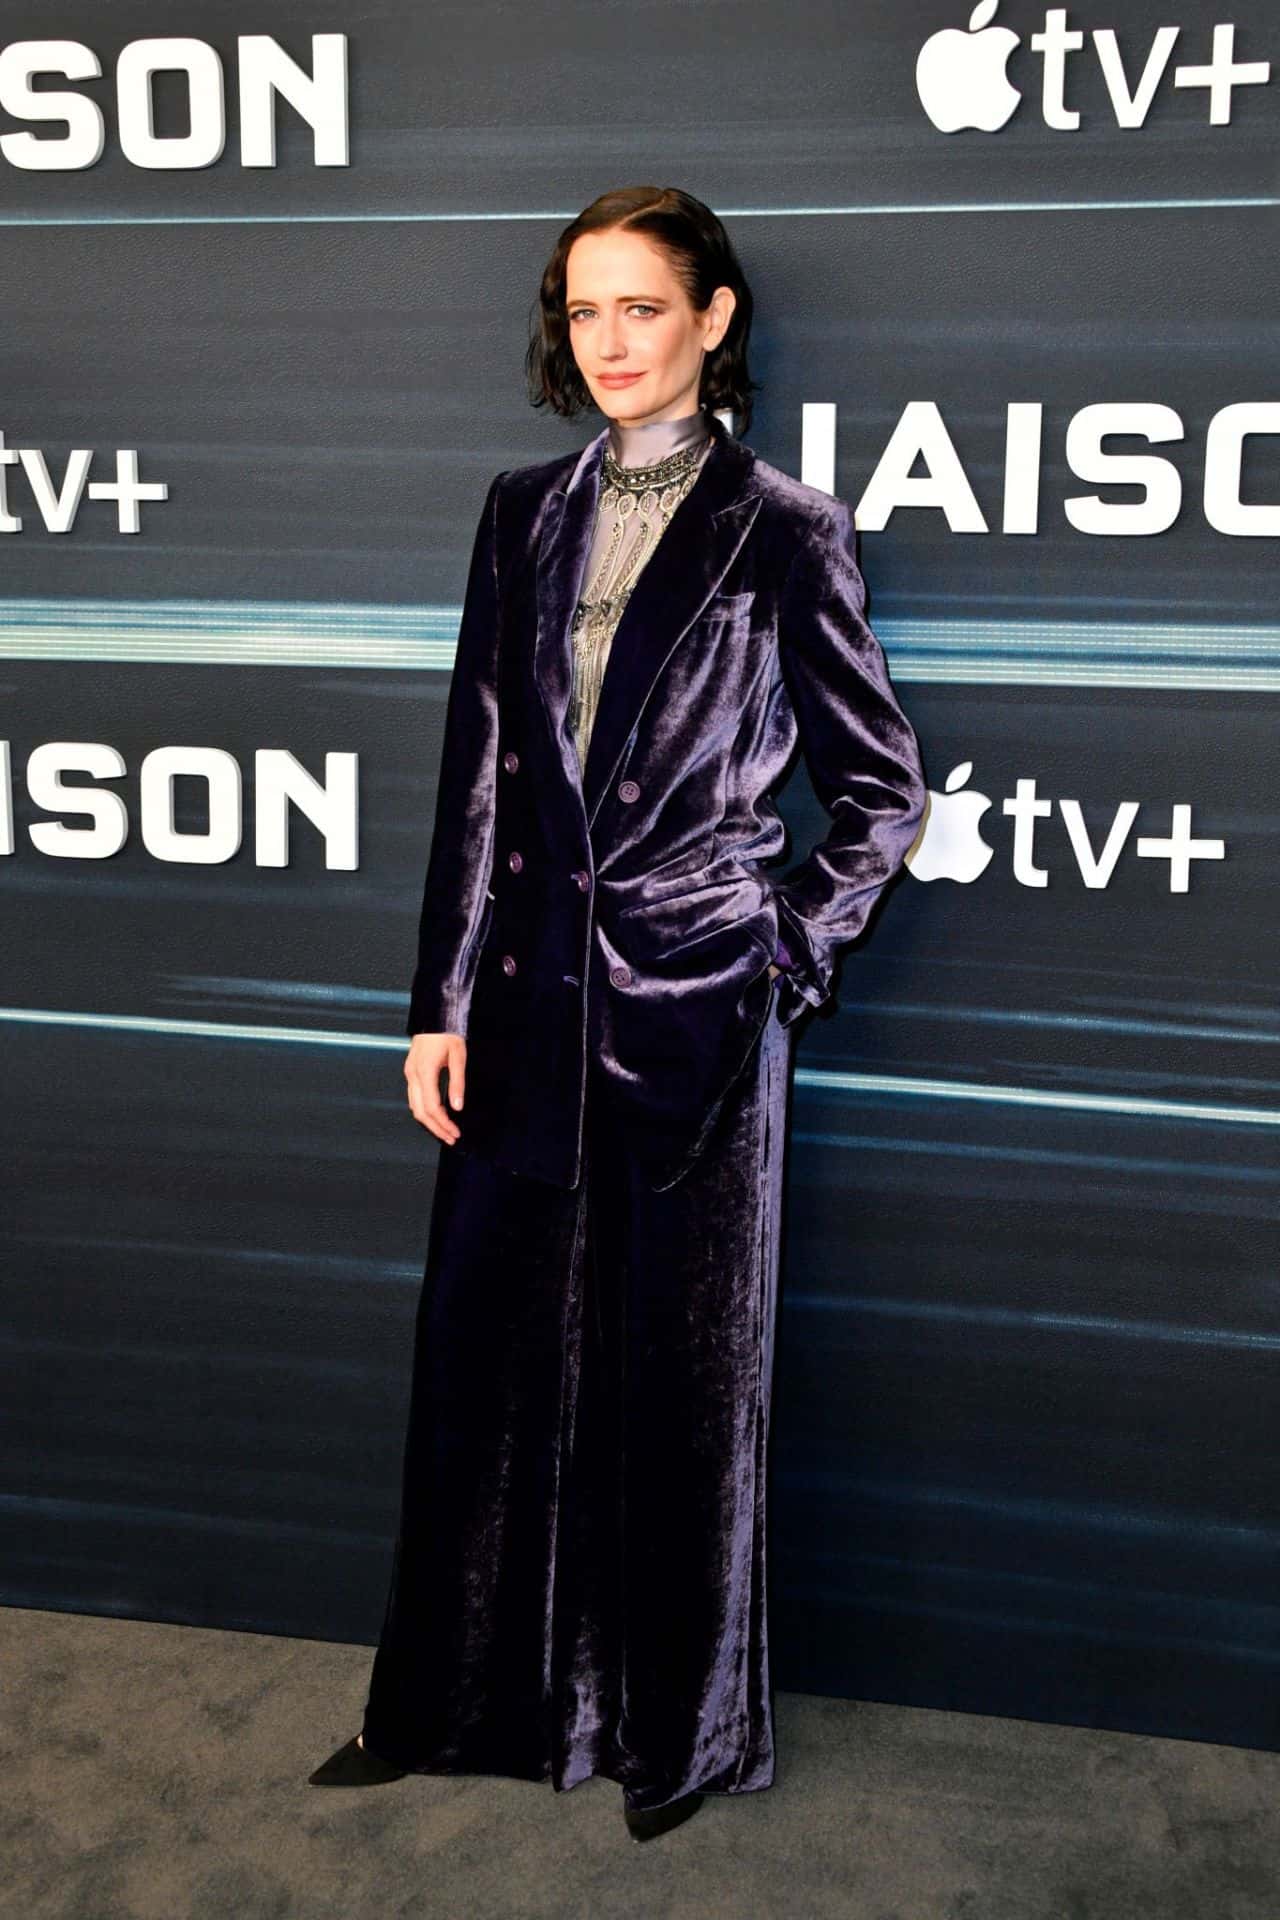 Eva Green Looks Amazing at "Liaison" Premiere in Elegant Velvet Suit